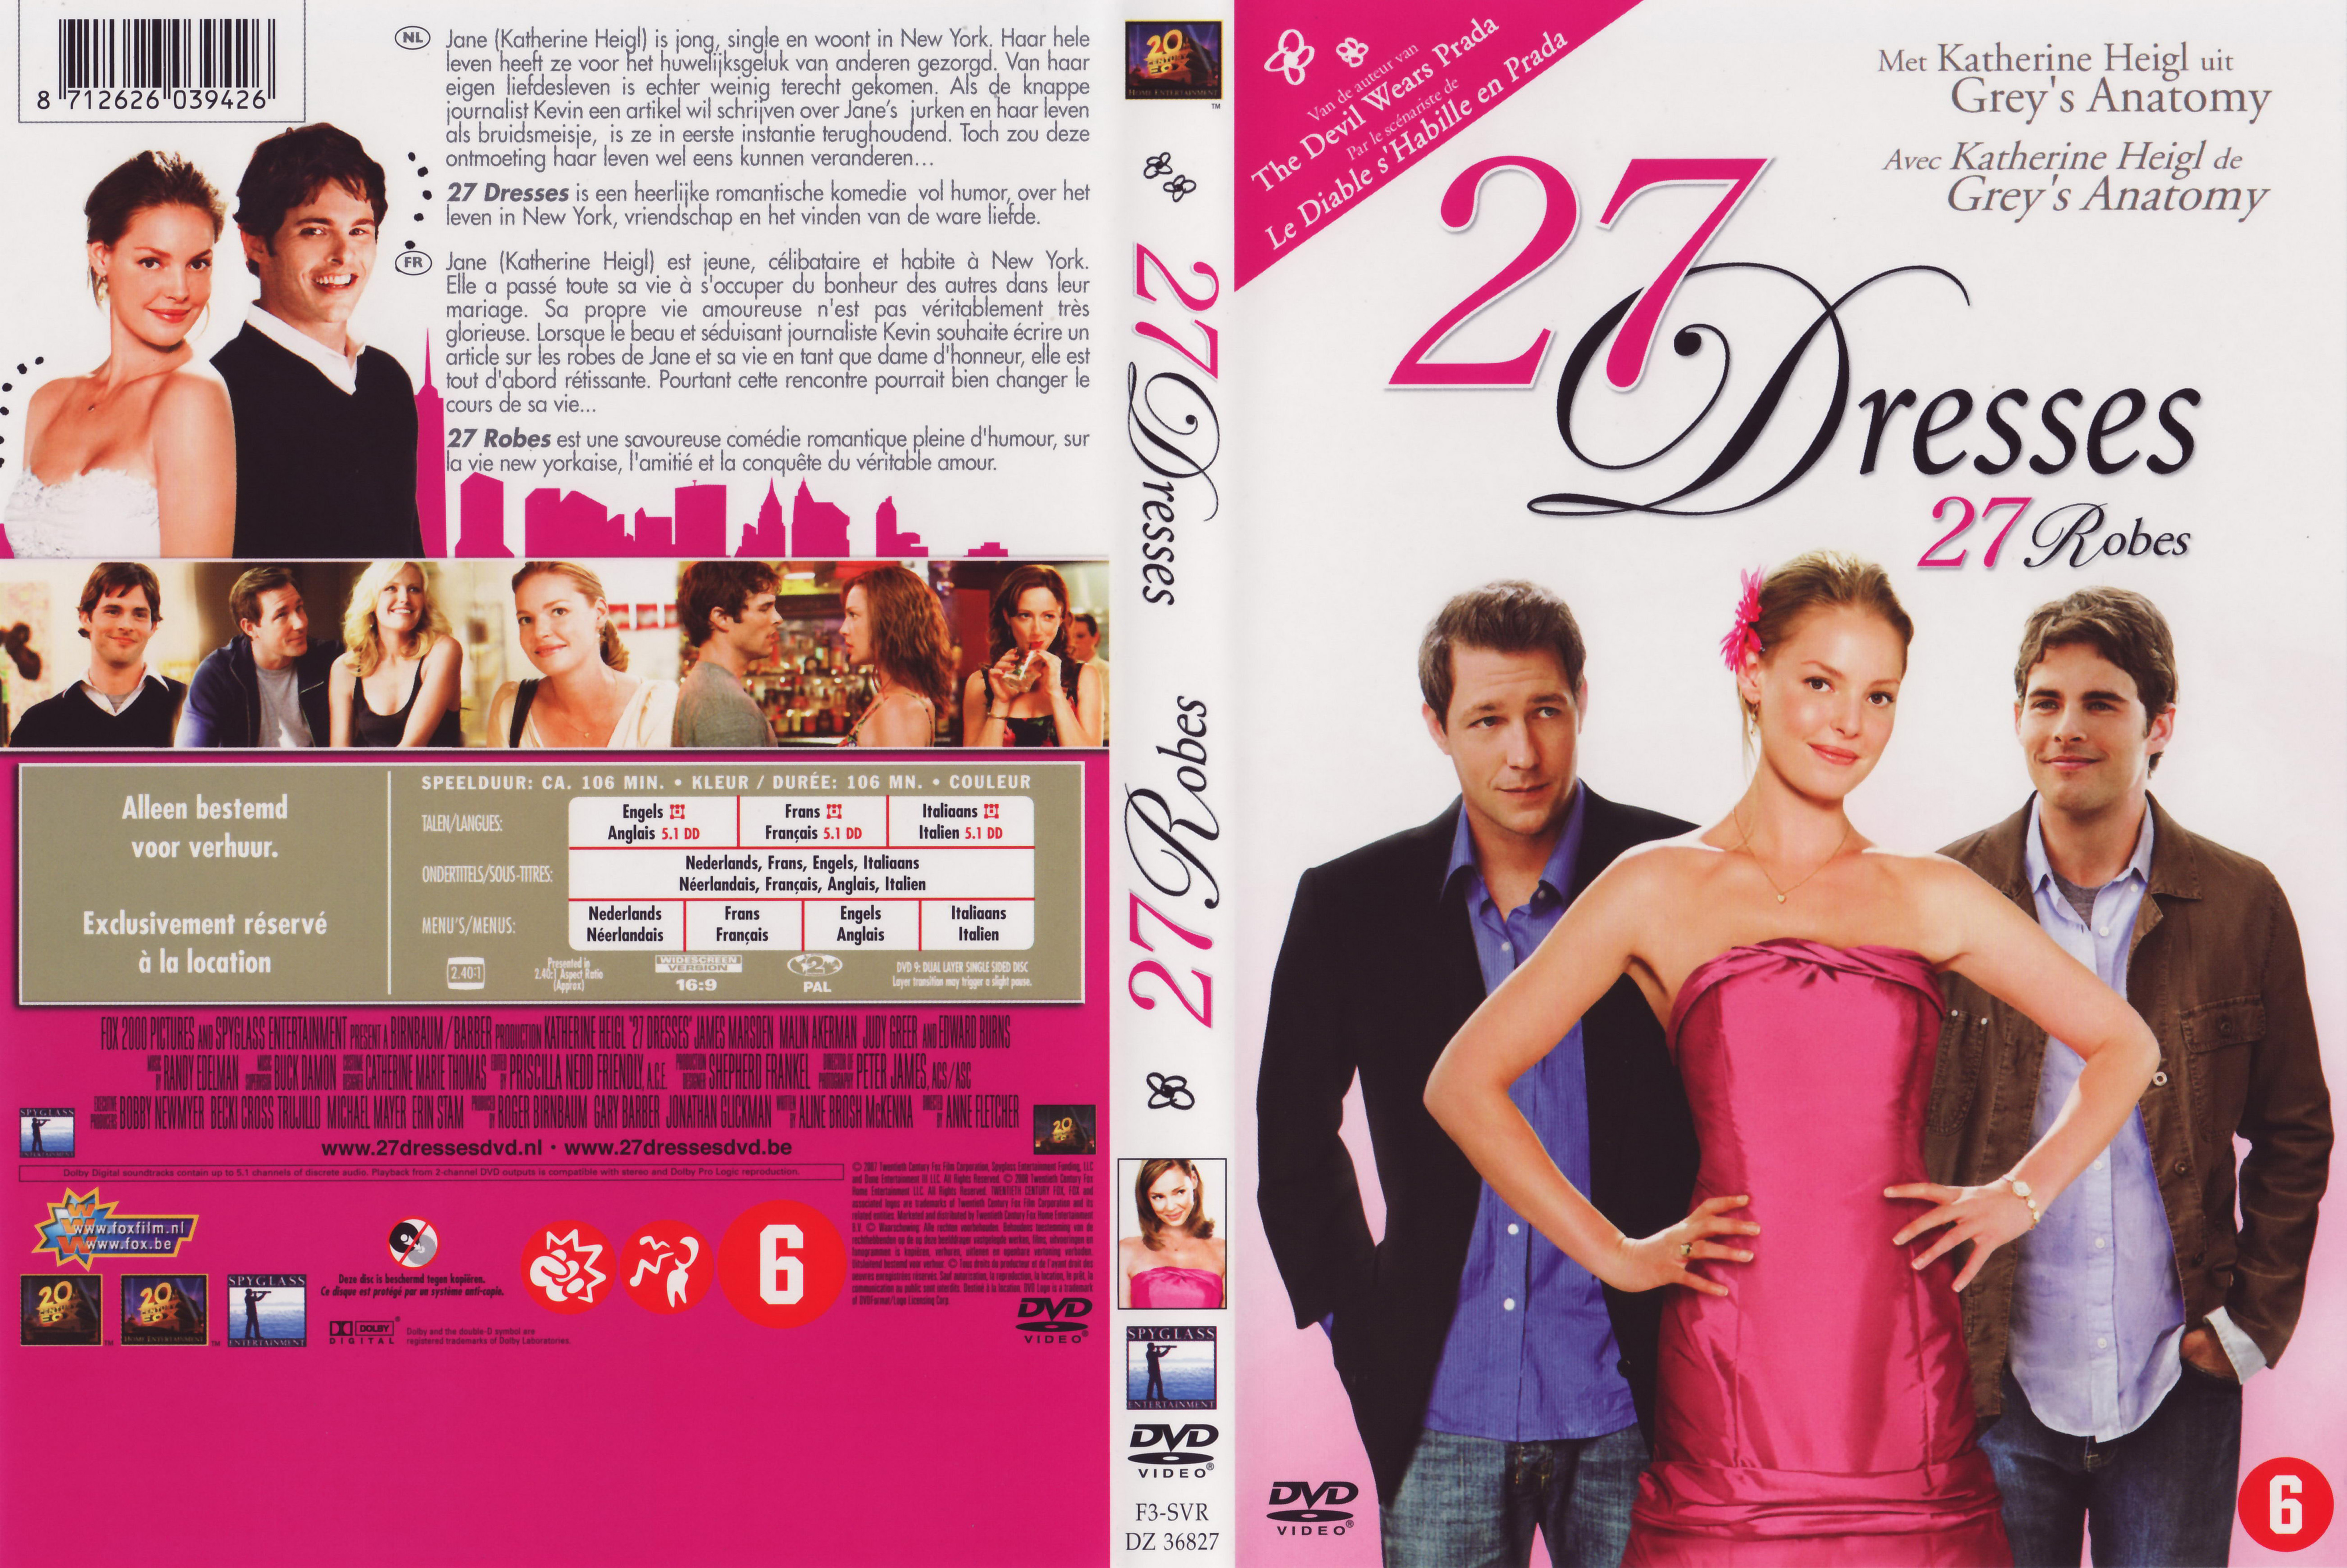 Jaquette DVD 27 robes - 27 dresses